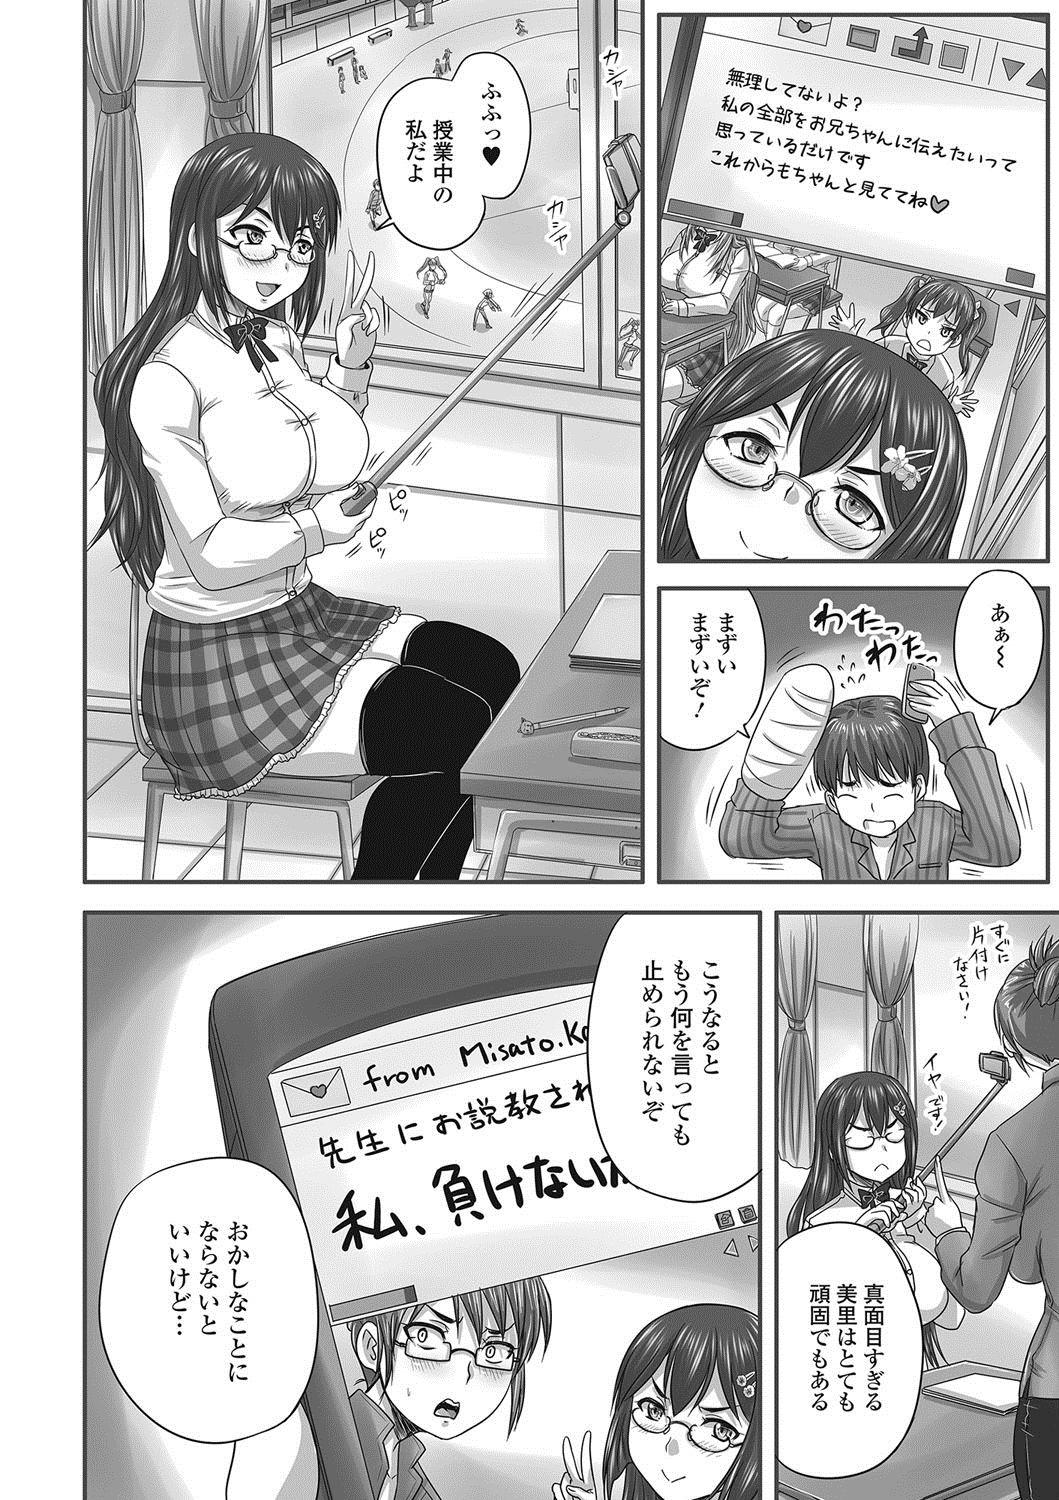 Bulge Nozoite wa Ikenai NEO - Do Not Peep NEO! Eng Sub - Page 9